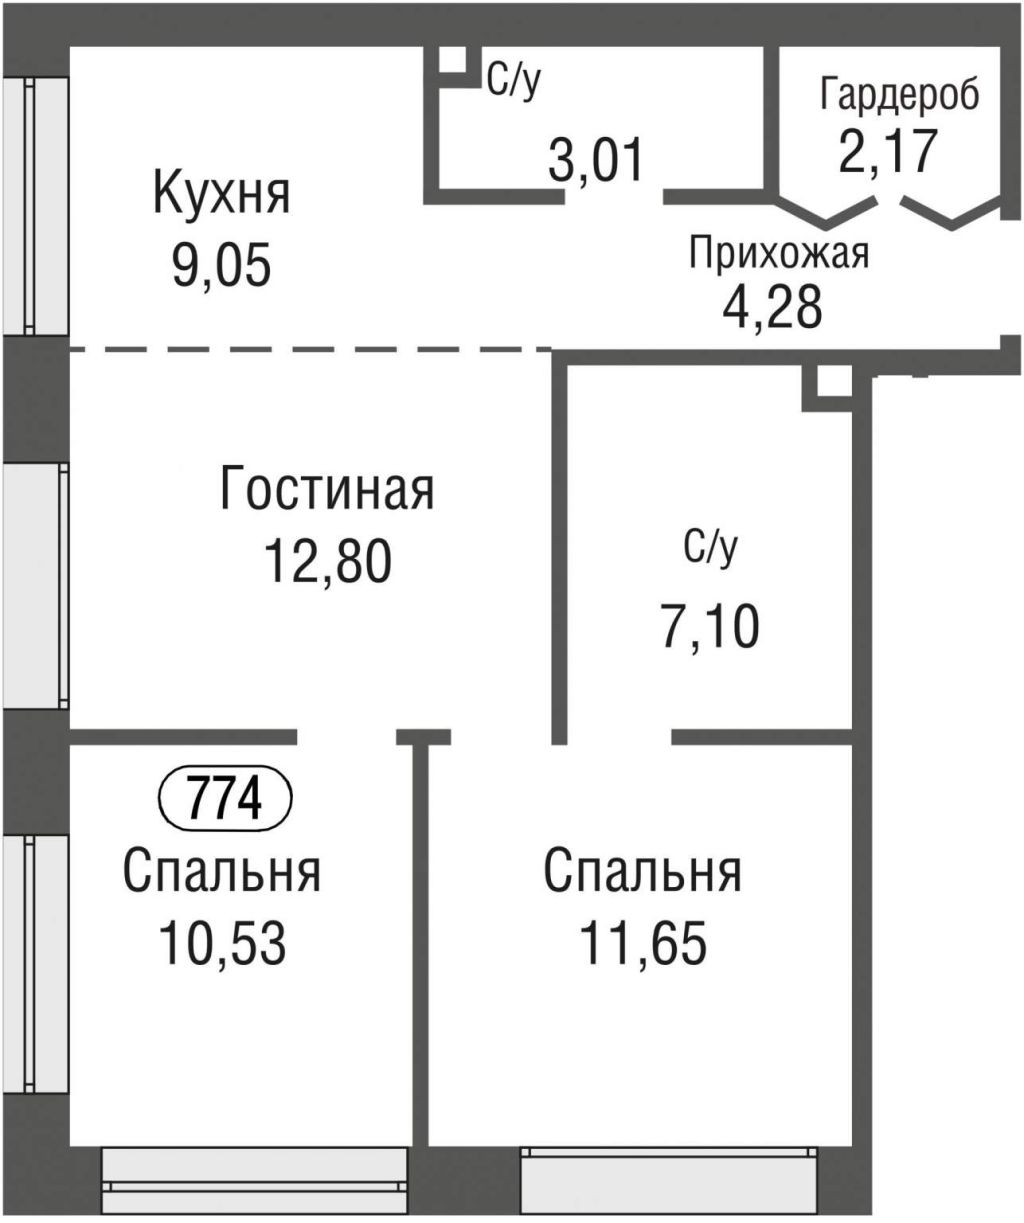 Продается 3-комн. квартира 60.59 м2 в новостройке в Москве, цена: 28616700 объявление №318563 от 23.05.2023 | Продажа квартиры в Москве | Авеланго